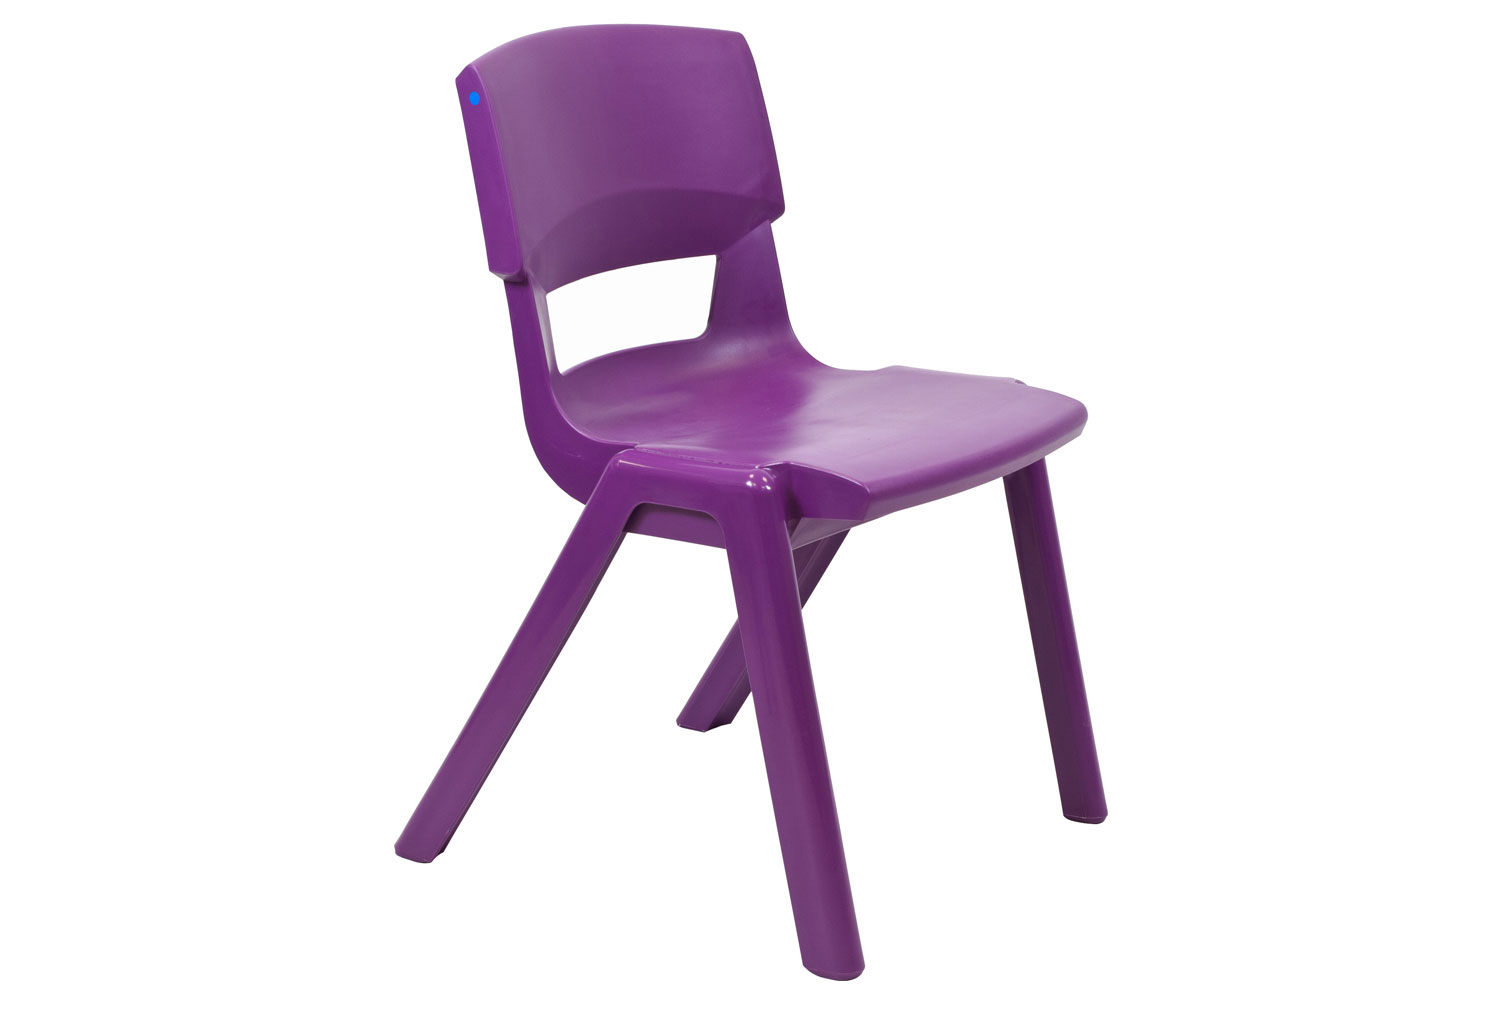 Qty 10 - Postura+ Classroom Chair, 14+ Years - 38wx37dx46h (cm), Grape